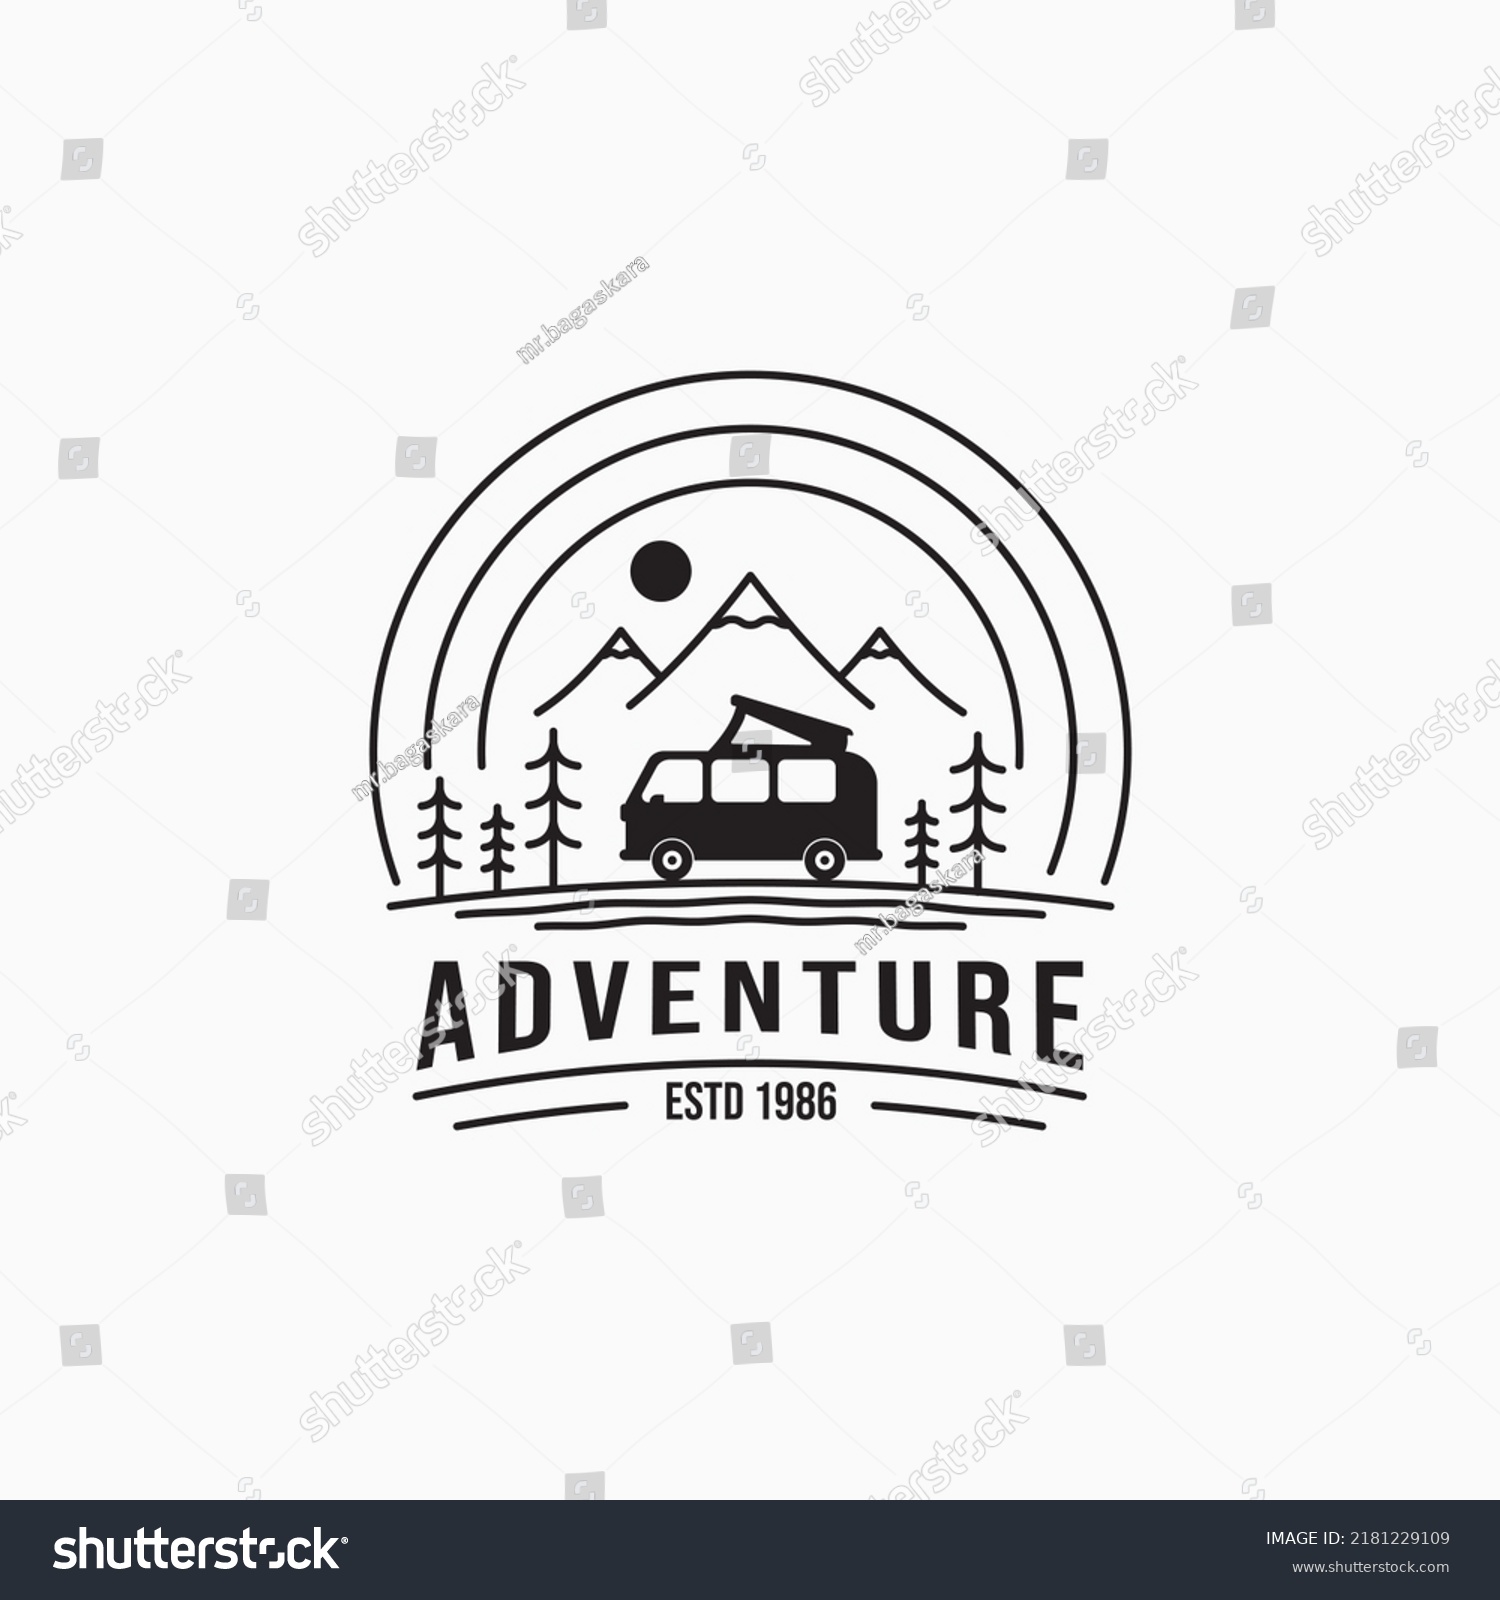 SVG of Silhouette camper van on mountain travel vintage logo design. Forest camp vacation summertime. Simple line art travel business logo concept. svg